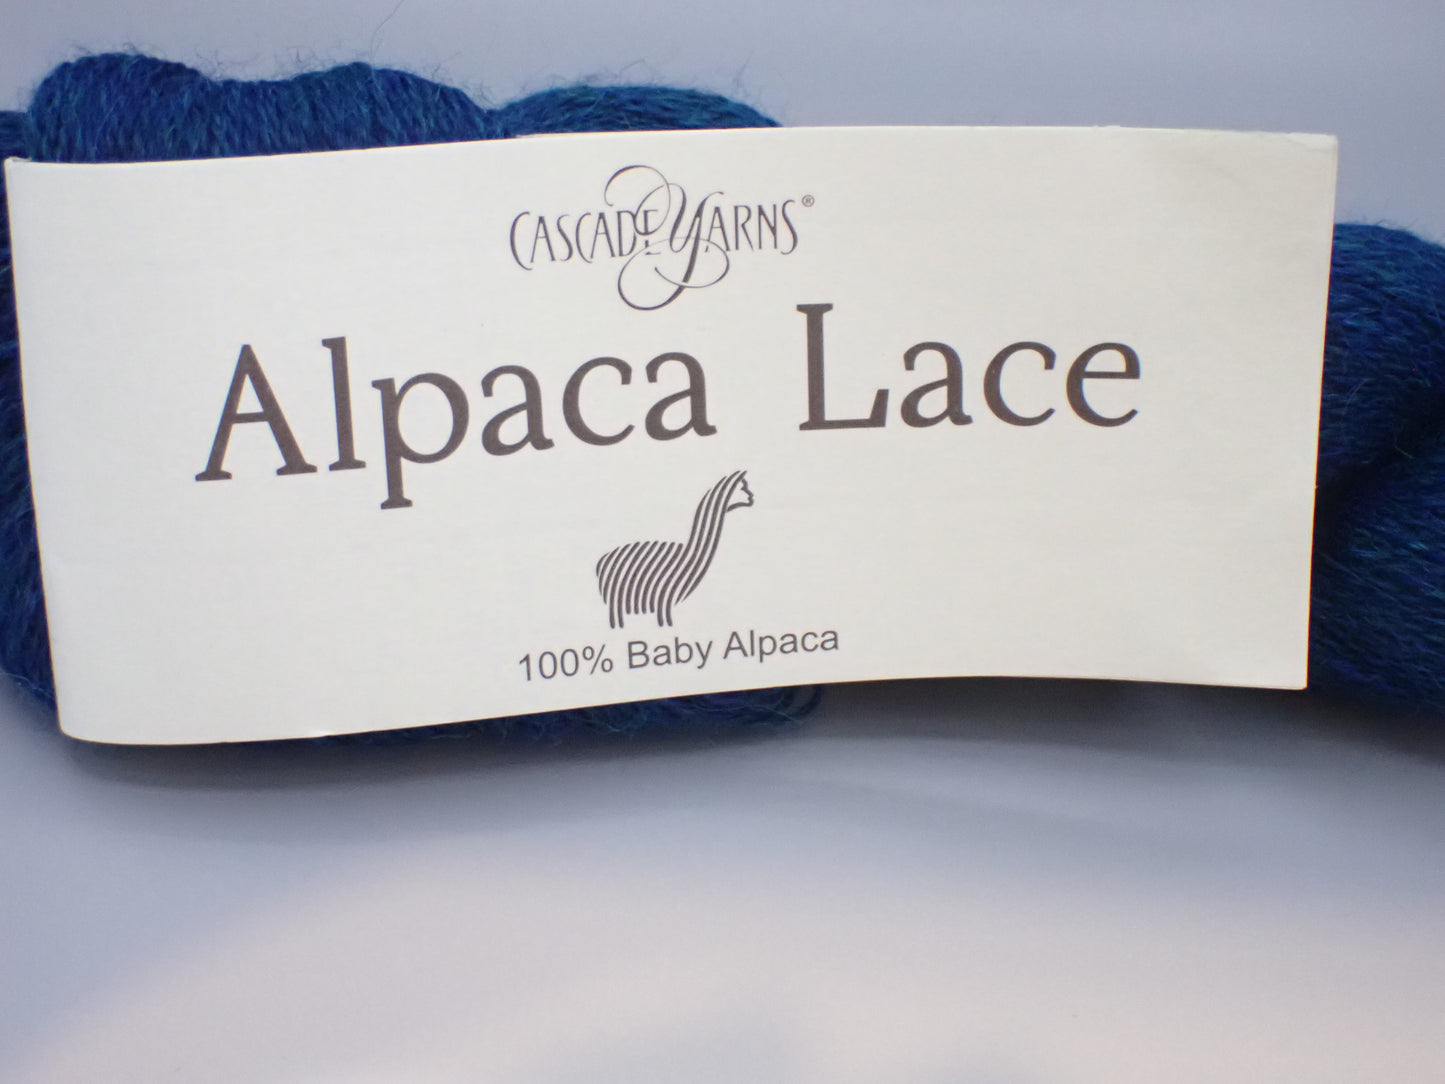 Cascade Yarns Alpaca Lace, Lace weight Aporto